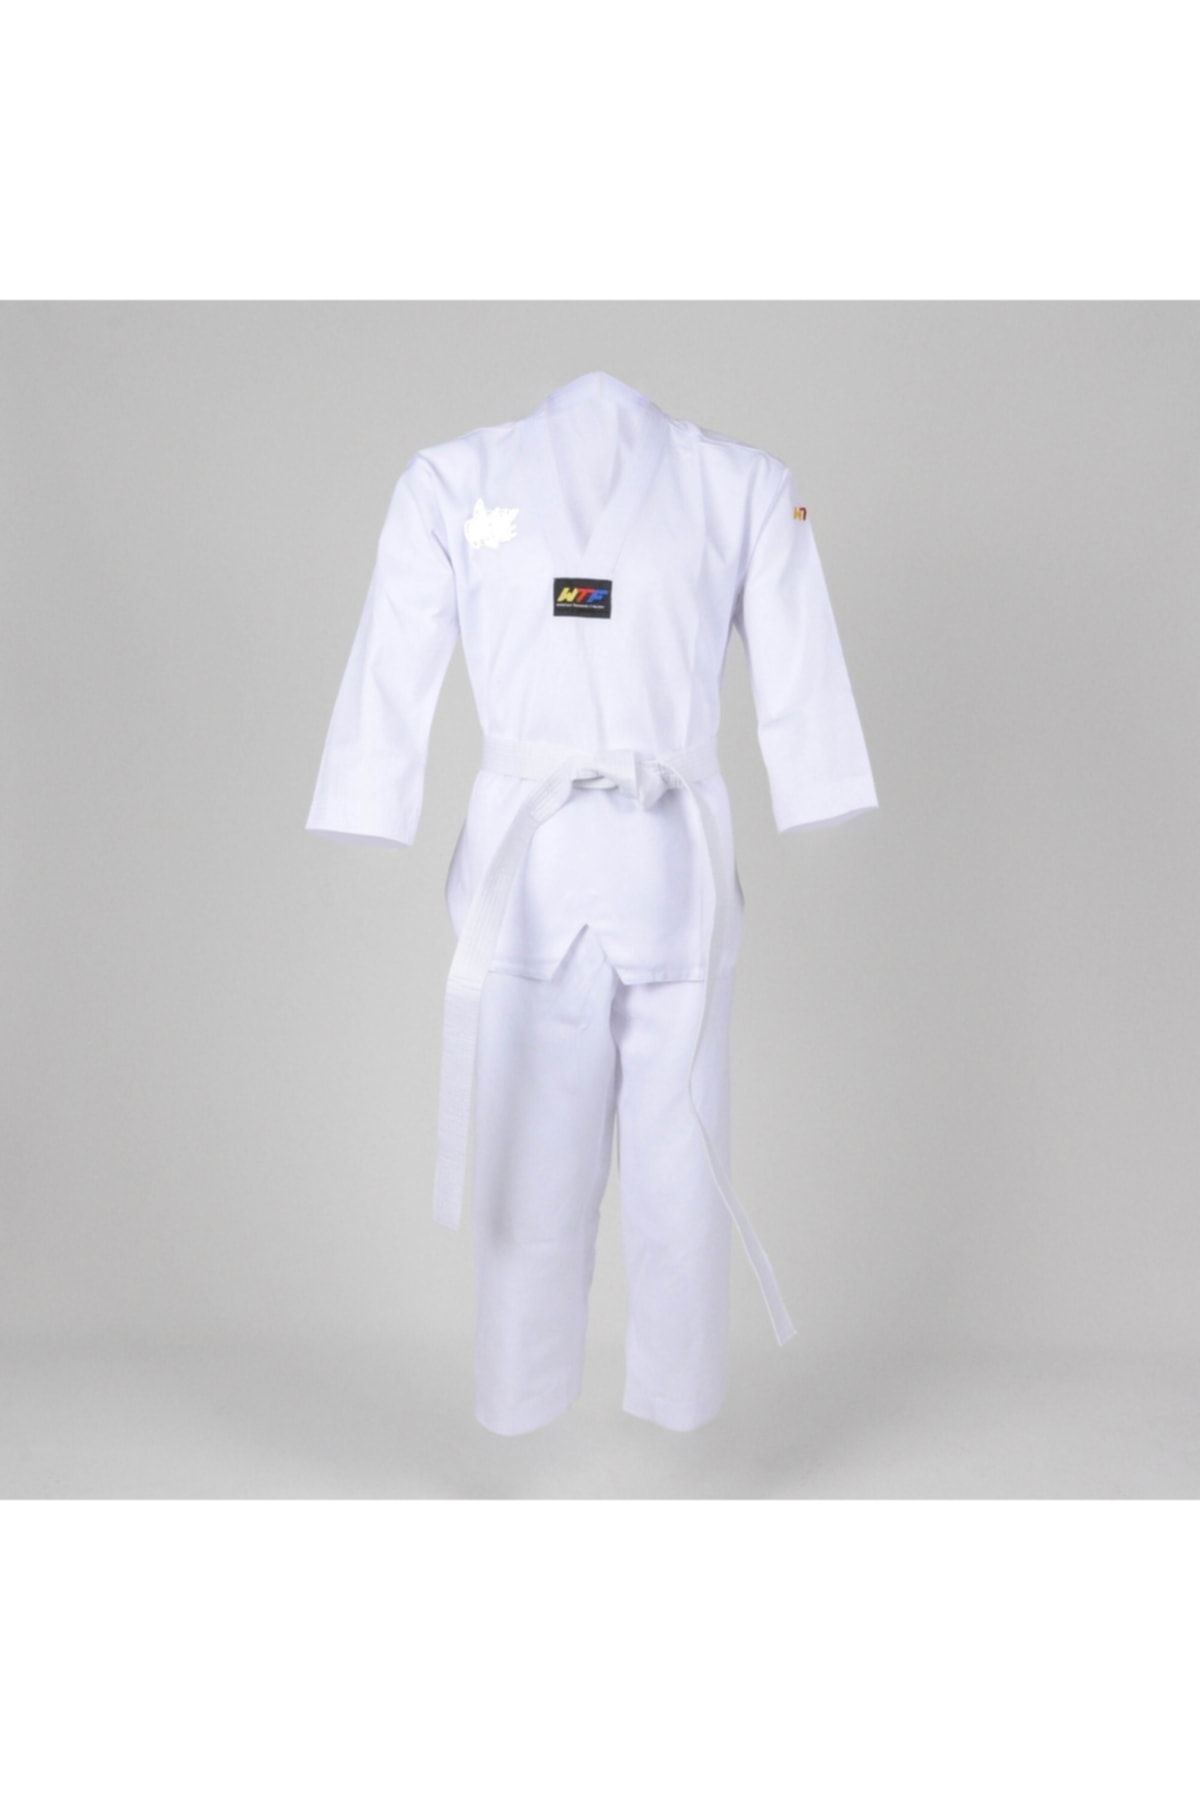 CYCLONE Taekwondo Elbisesi - Tekvando Elbisesi - Acemi Dobok - Beyaz Yaka Taekwondo Elbisesi